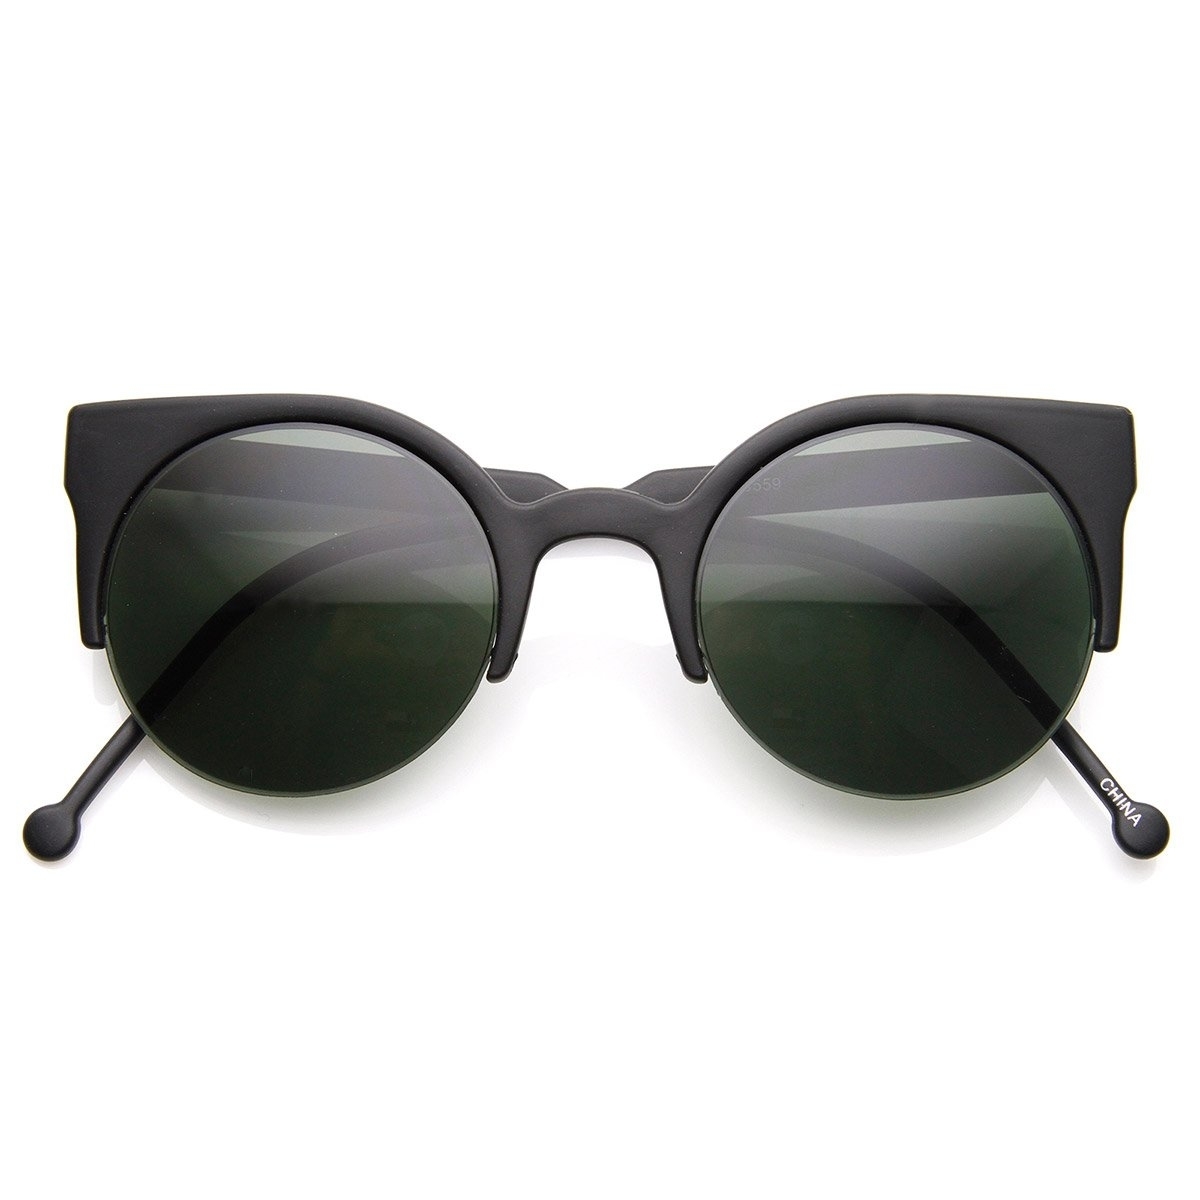 Womens Fashion Half Frame Round Cateye Sunglasses - image 5 of 6